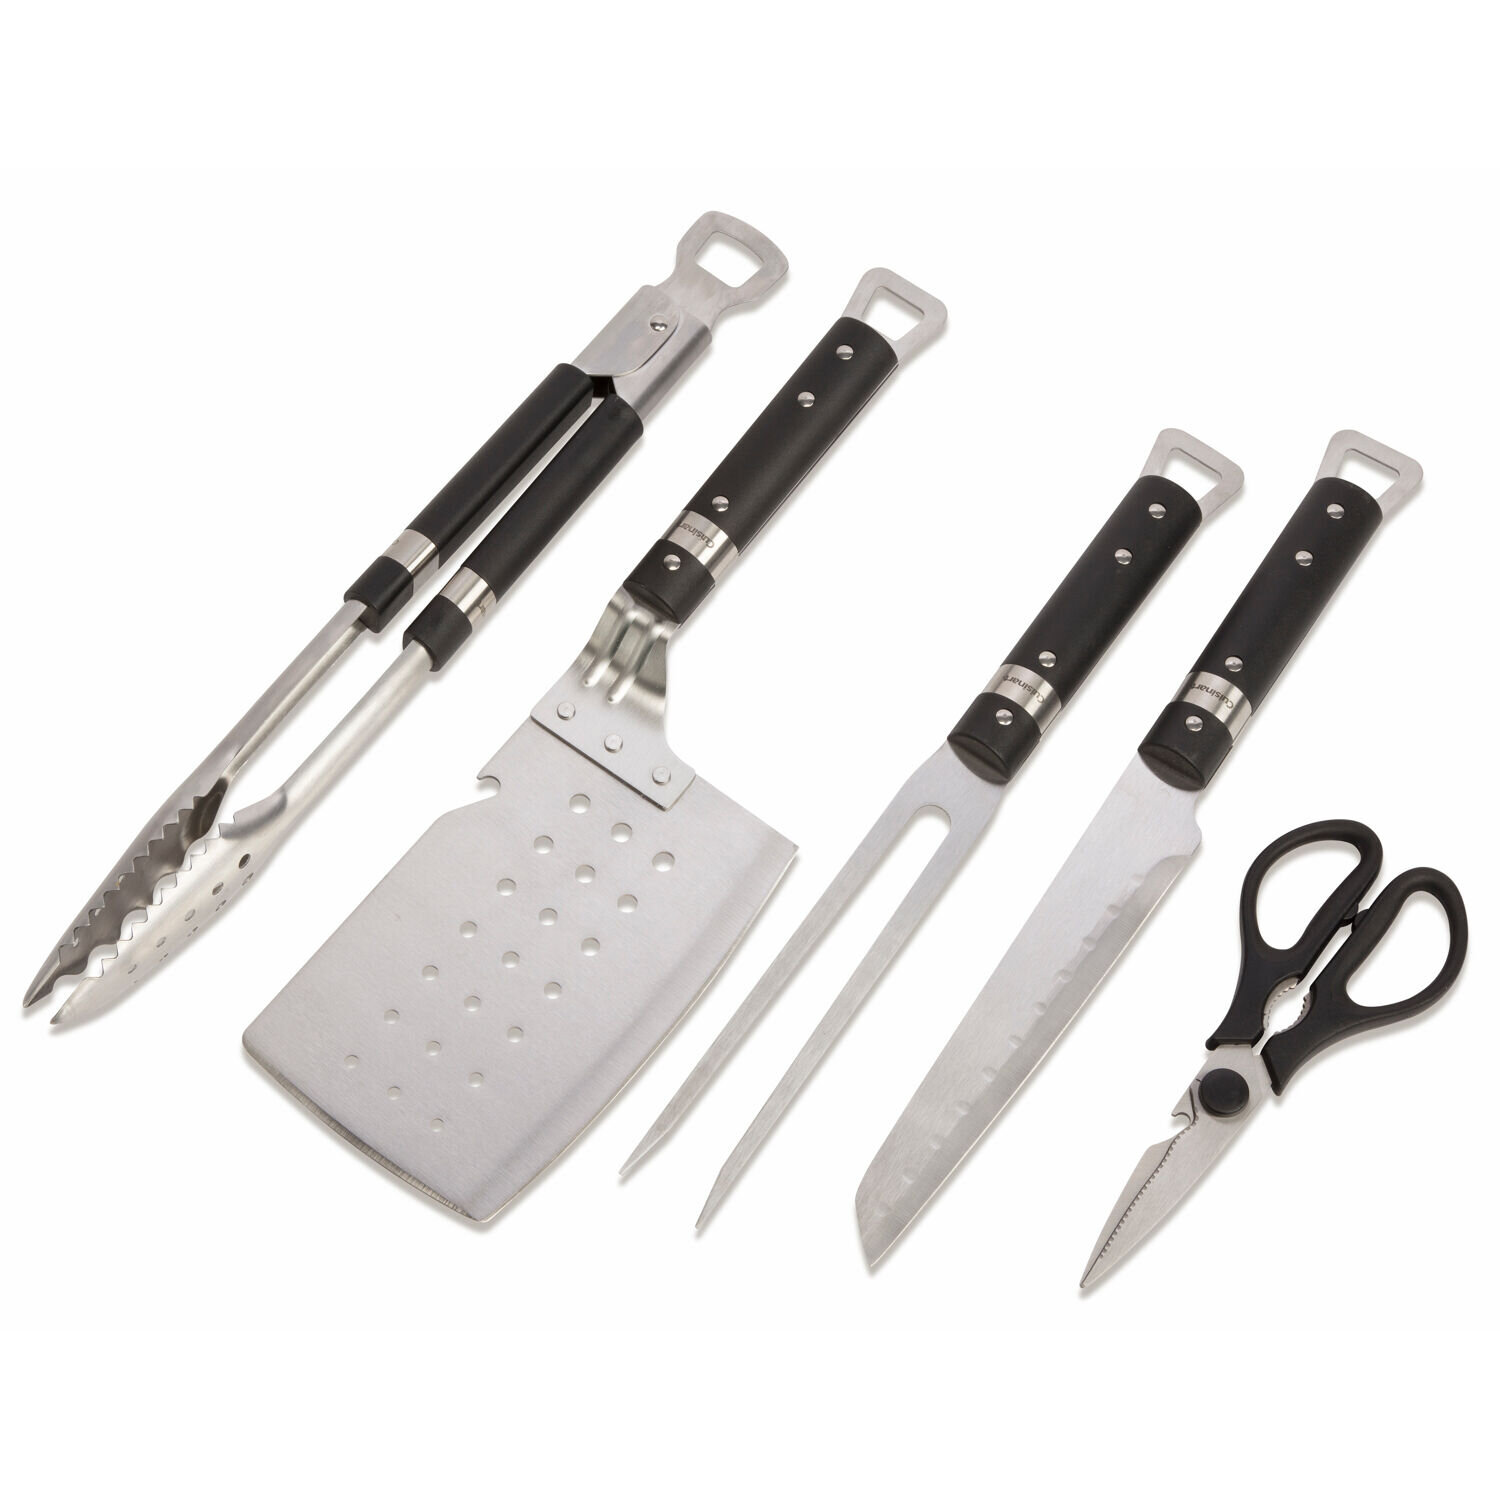 Kona Grill Tools Set - Stainless-Steel Spatula, Tongs, Fork, Knife, Op